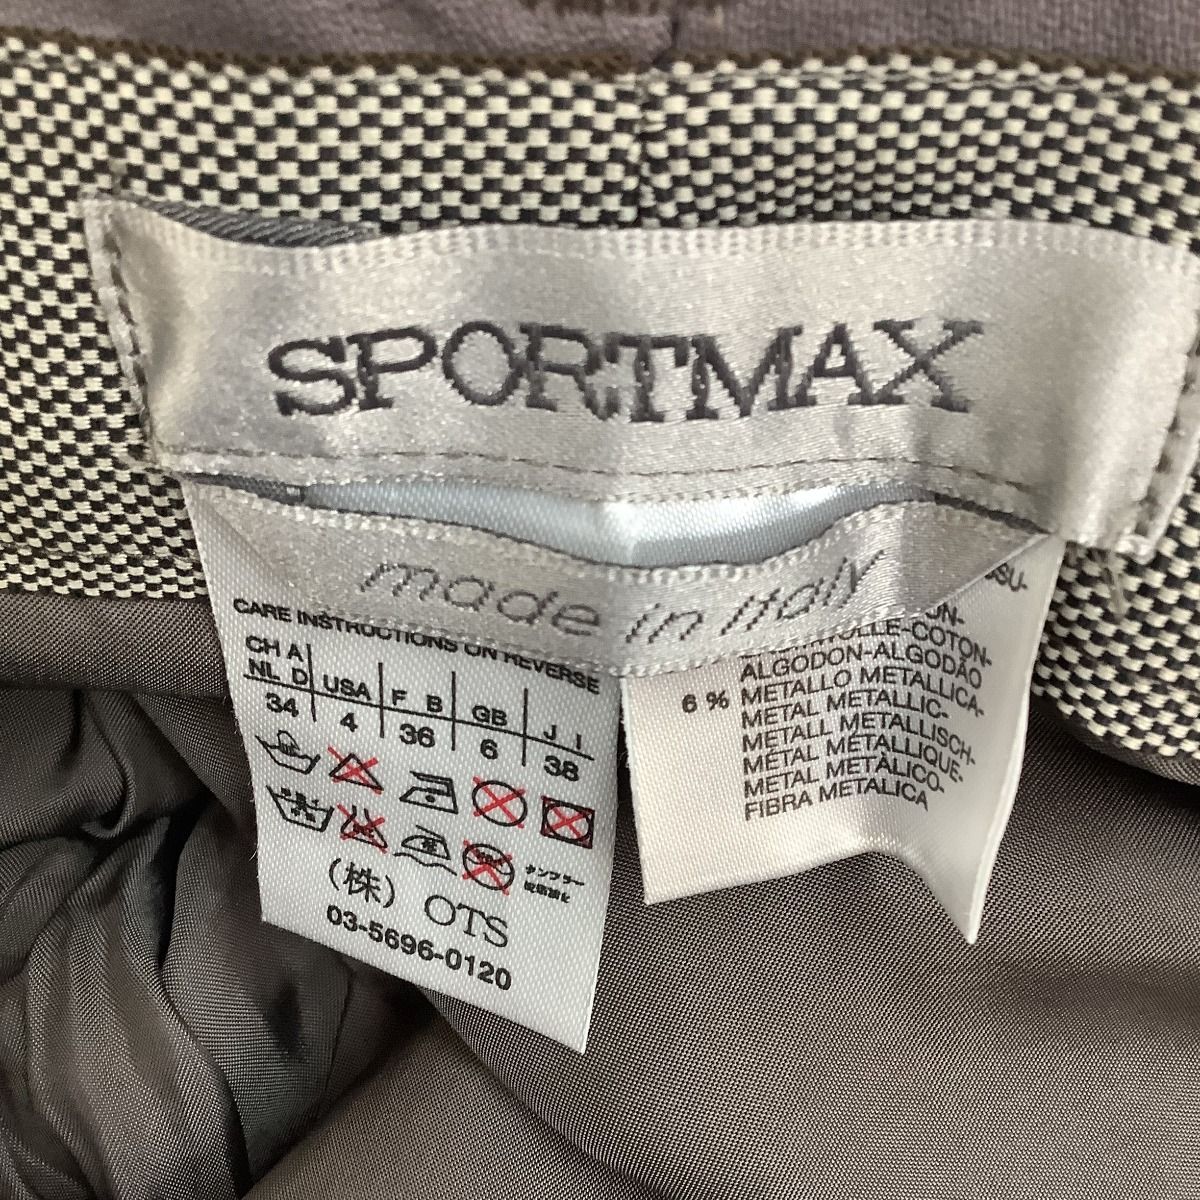 ♪♪sportmax スポーツマックス レディース パンツ SIZE 38 グレー - メルカリ